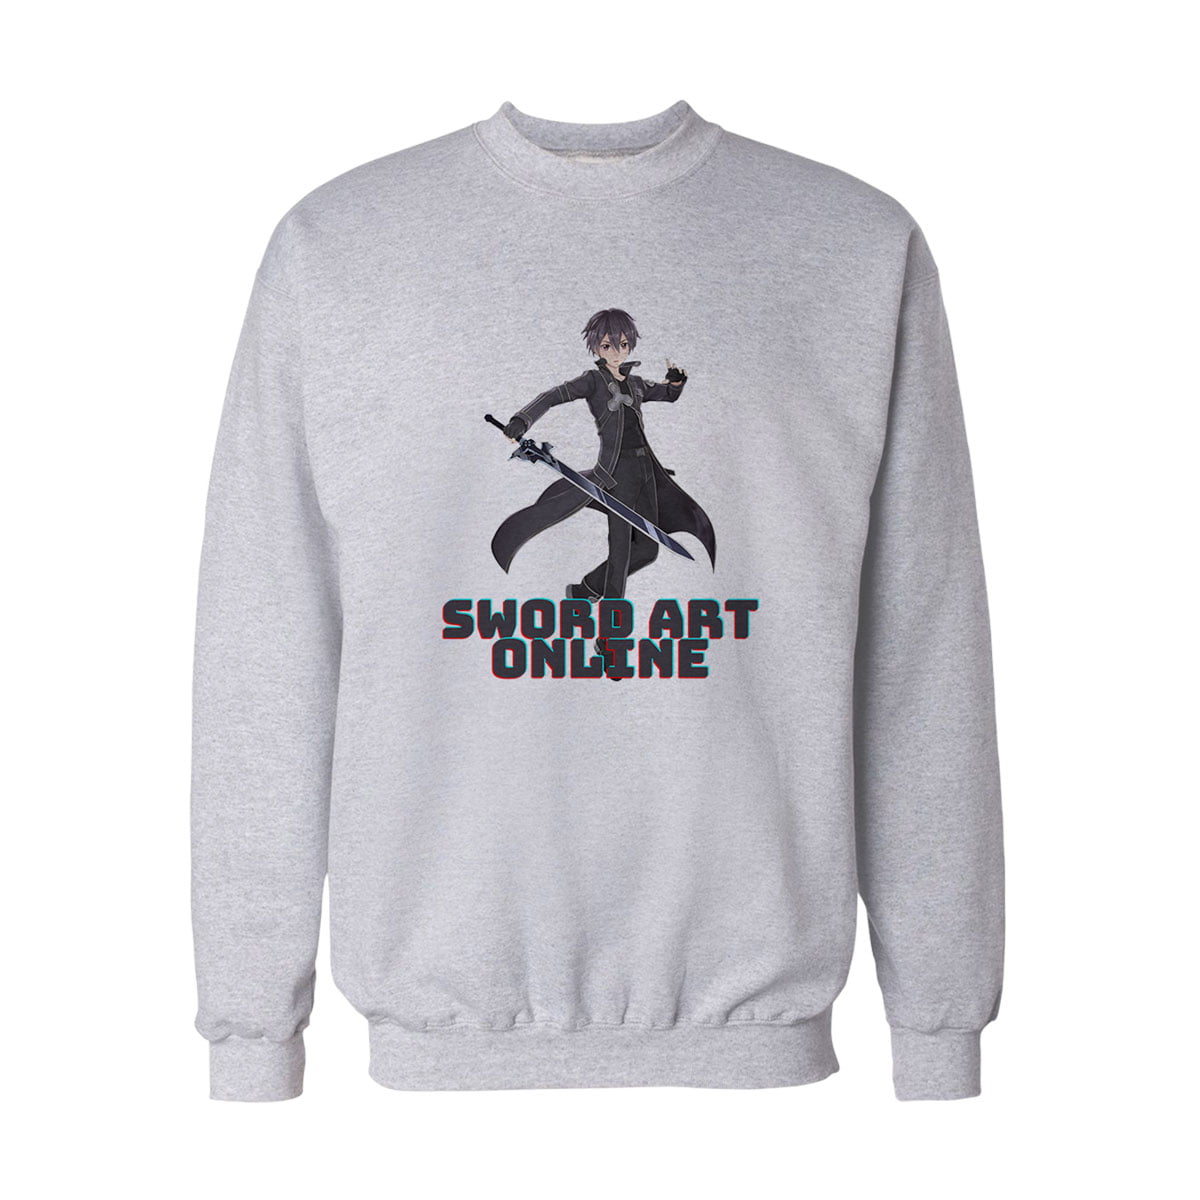 Sword Art online Kirito Sweatshirt B